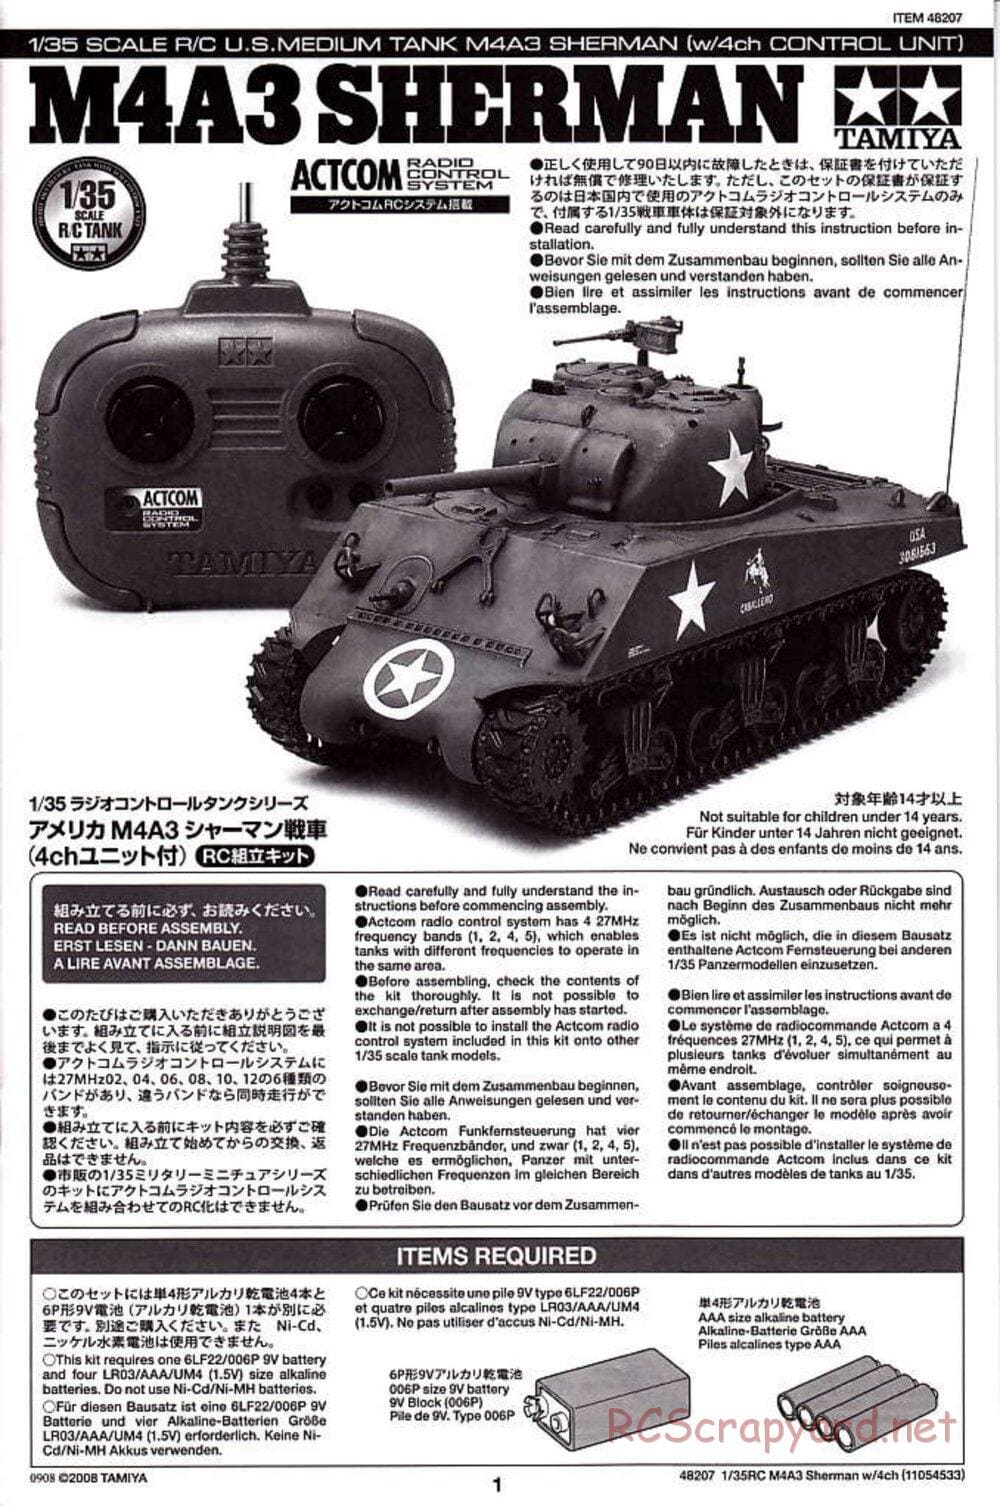 Tamiya - US Medium Tank M4A3 Sherman - 1/35 Scale Chassis - Manual - Page 1